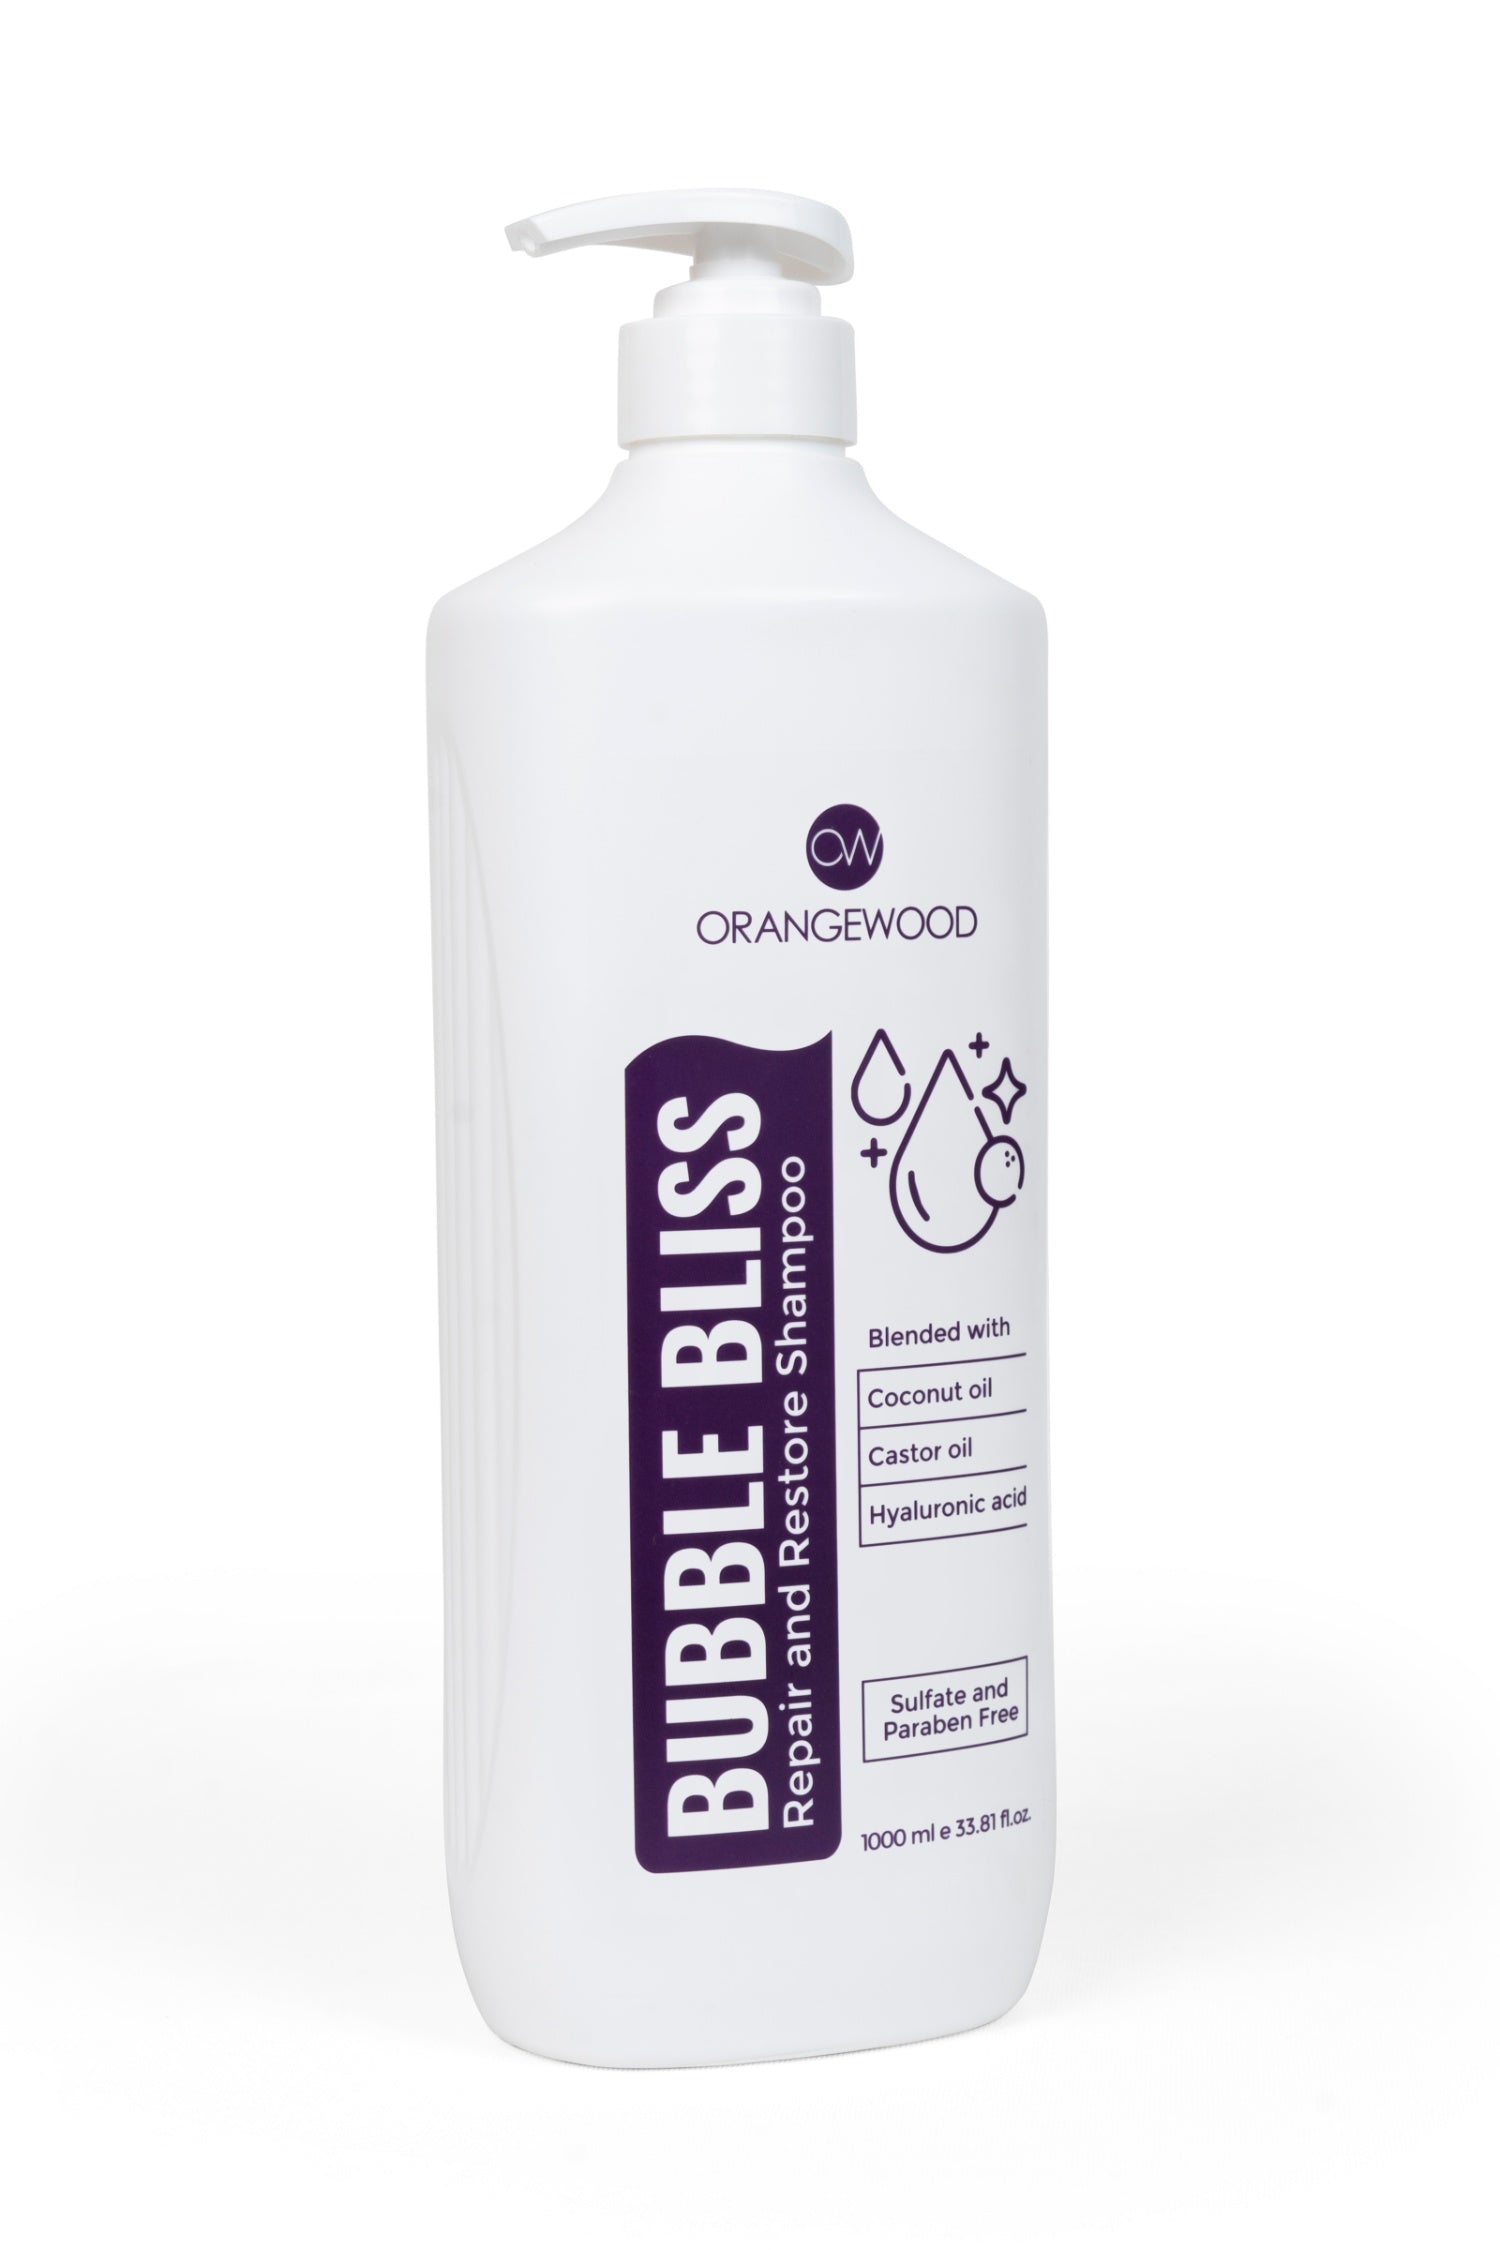 Orangewood Bubble Bliss Repair and Restore Shampoo - 1000ml